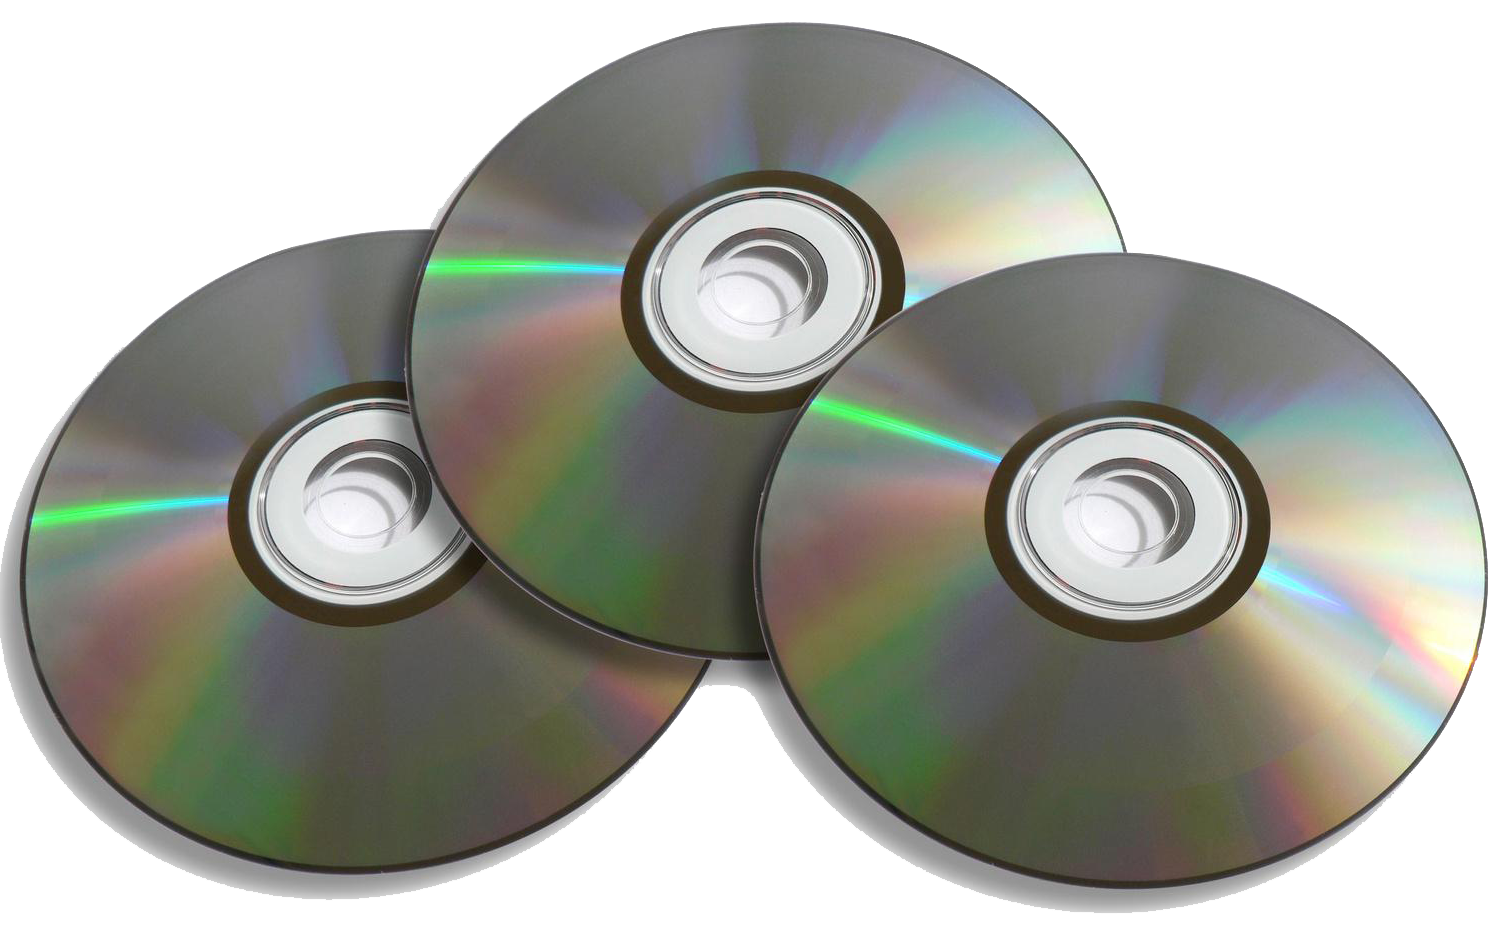 Cd фото. Компакт – диск, Compact Disc (CD). CD (Compact Disc) — оптический носитель. CD (Compact Disk ROM) DVD (Digital versatile Disc). CD-R (Compact Disk Recorder).